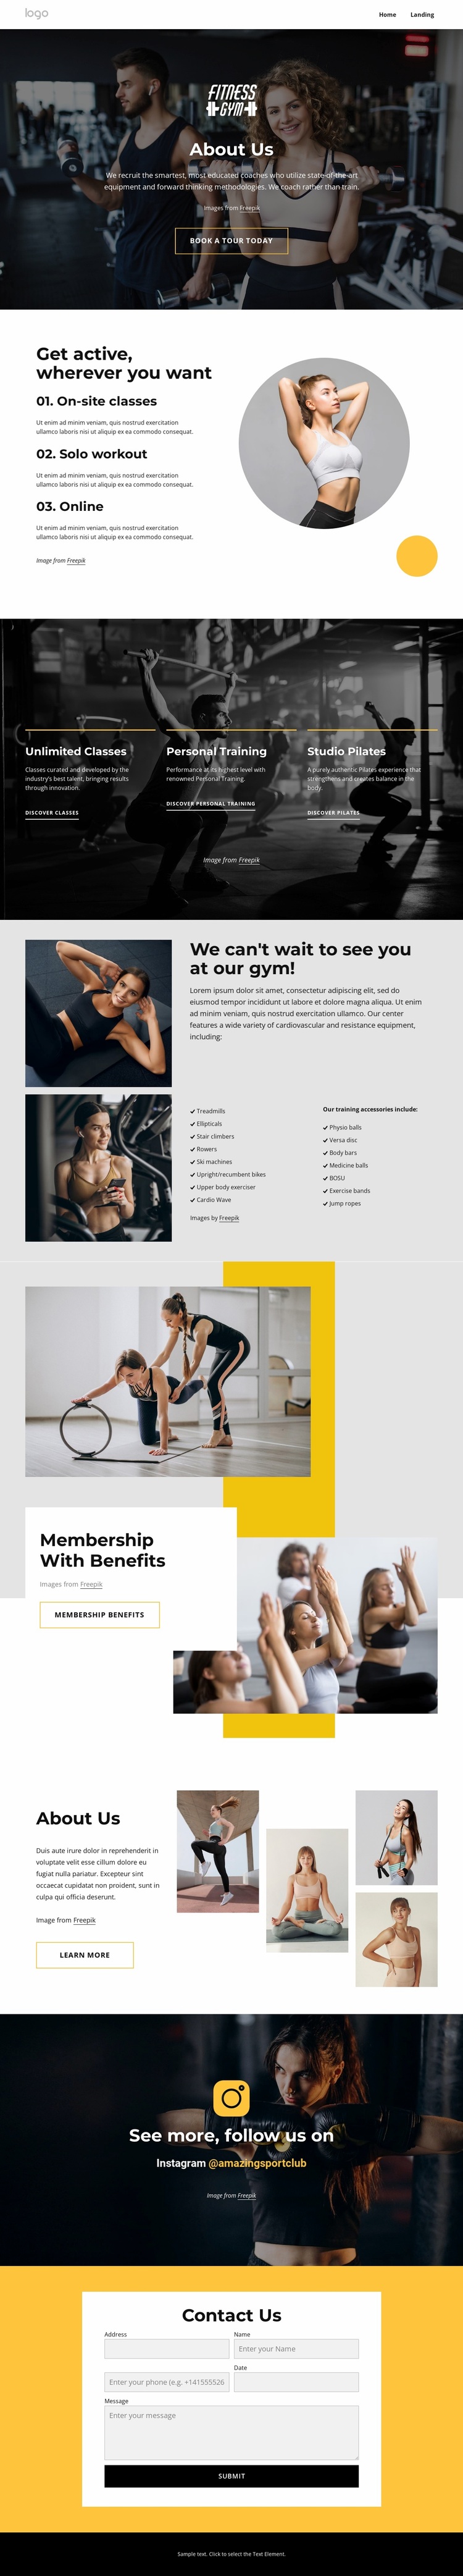 Sport and wellness center Website Design